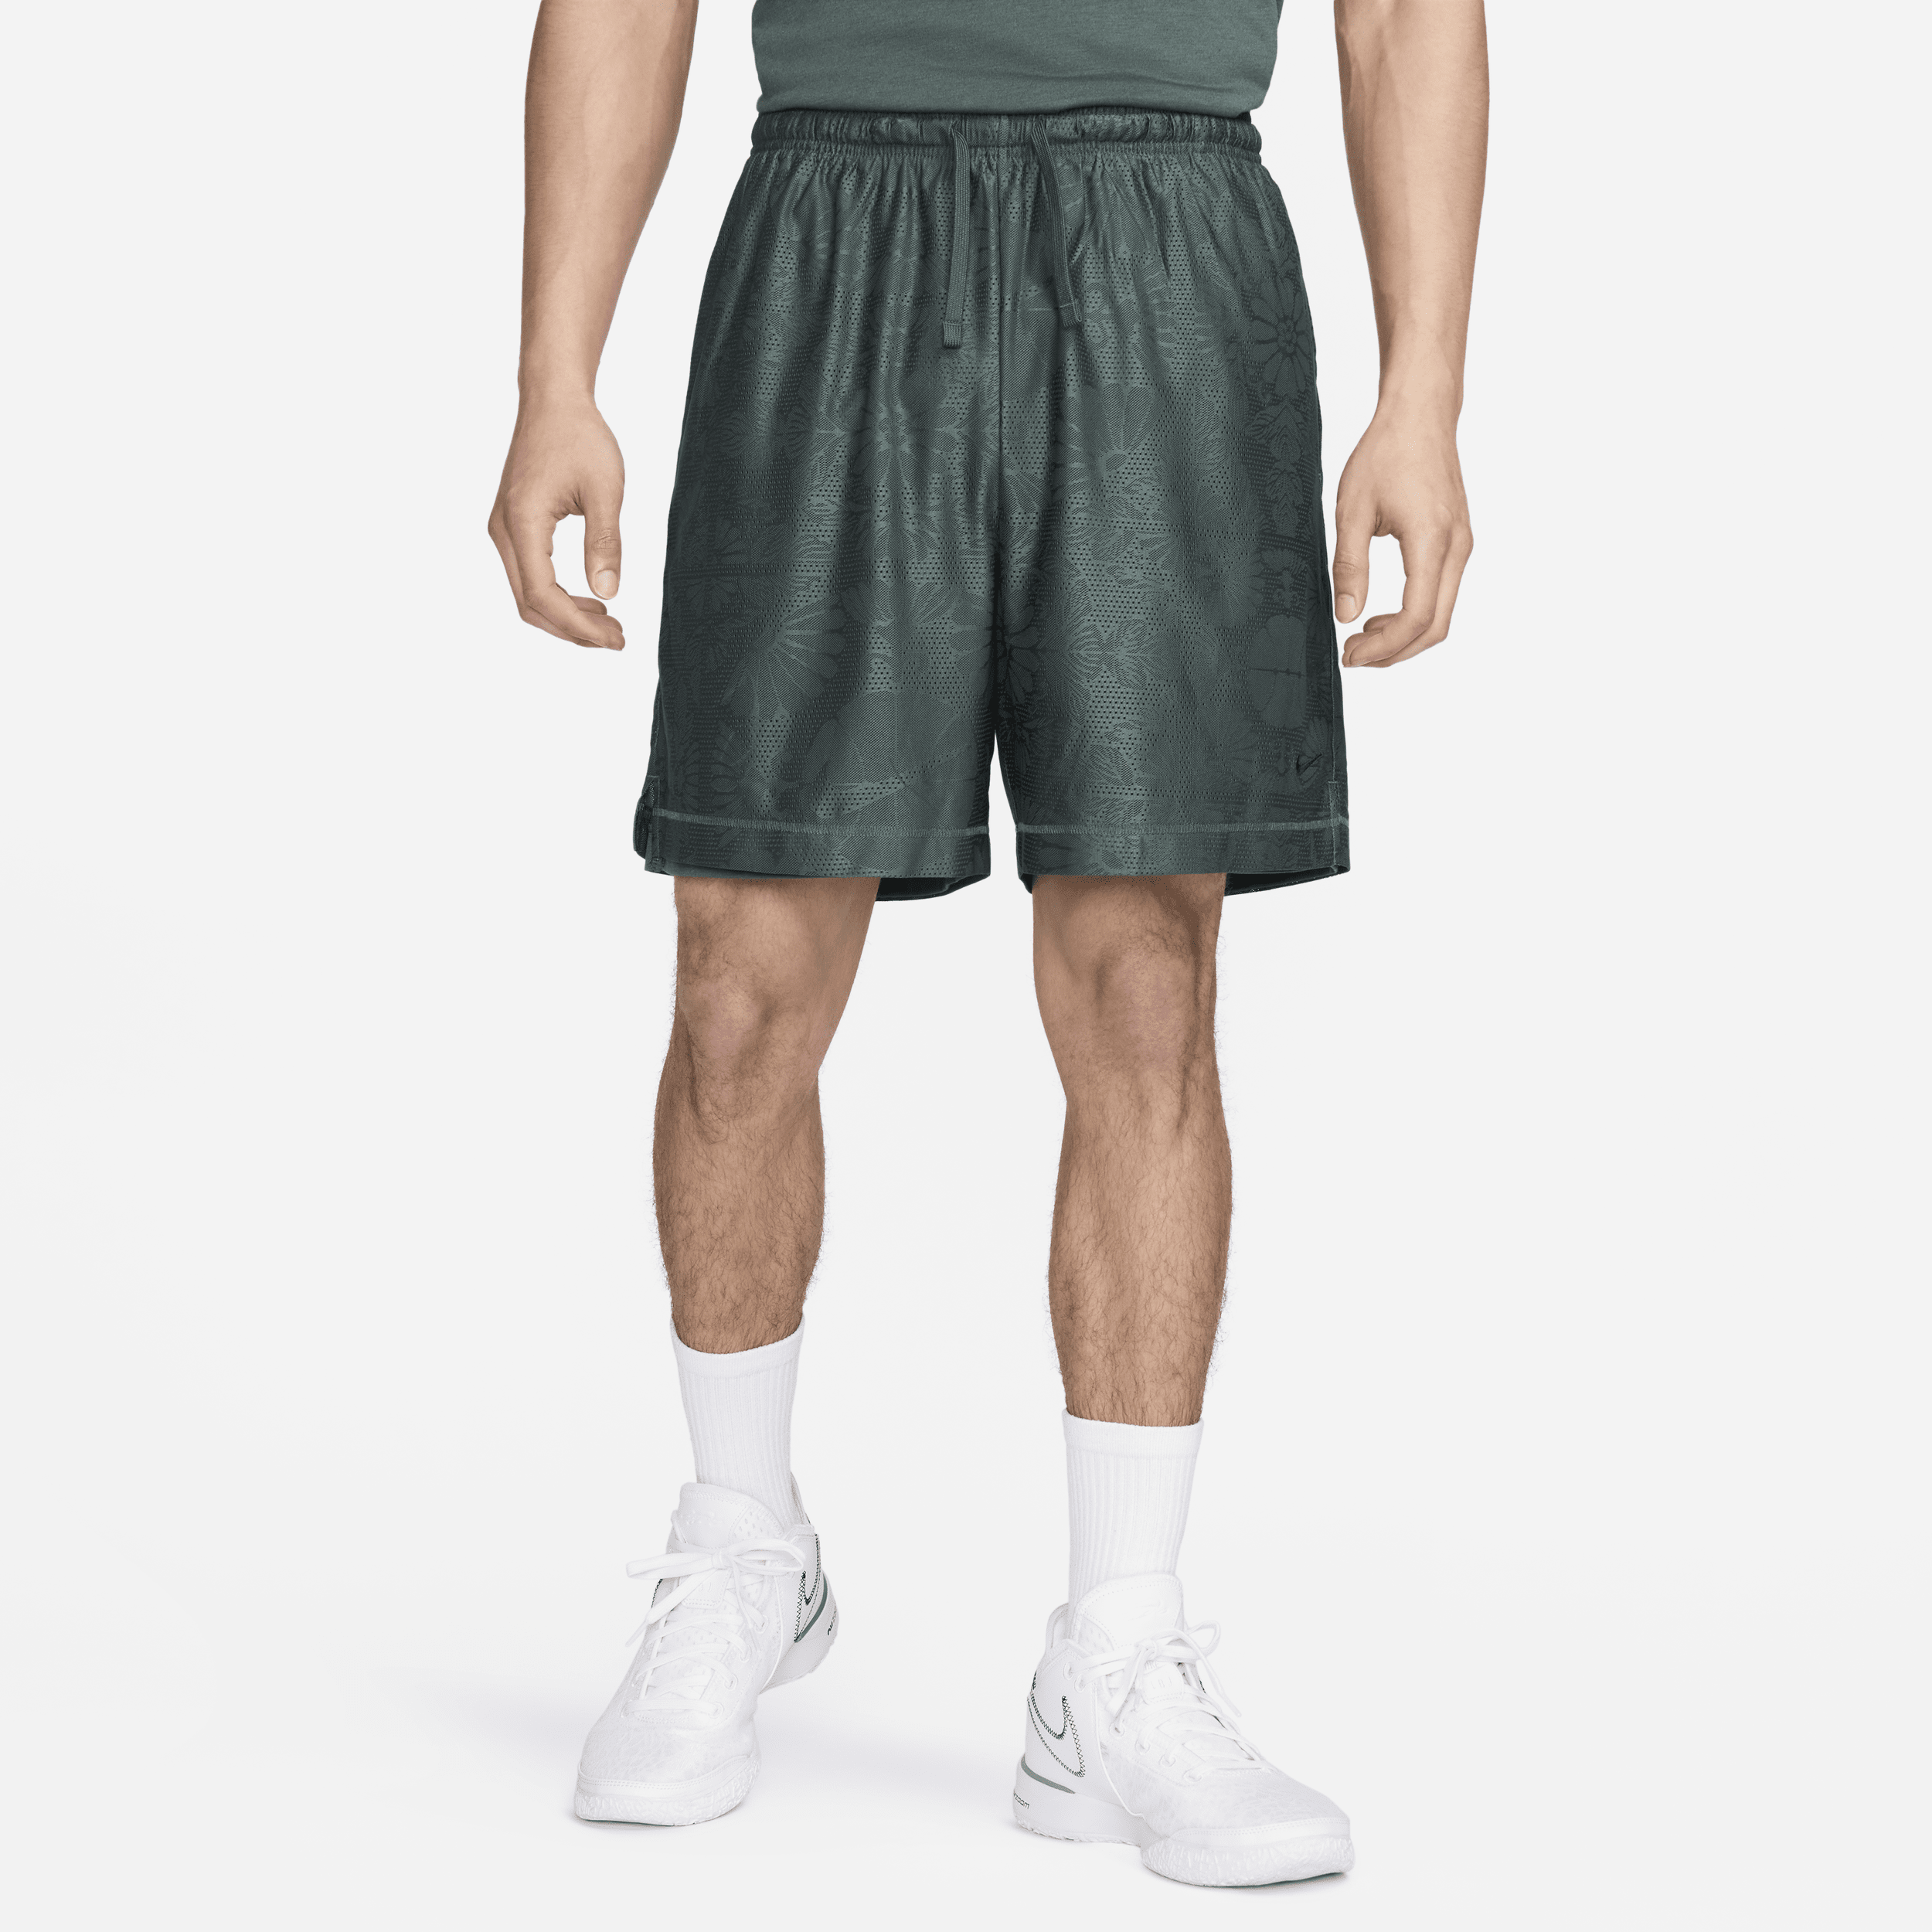 Nike Standard Issue Pantalón corto de baloncesto de 15 cm reversible - Hombre - Verde